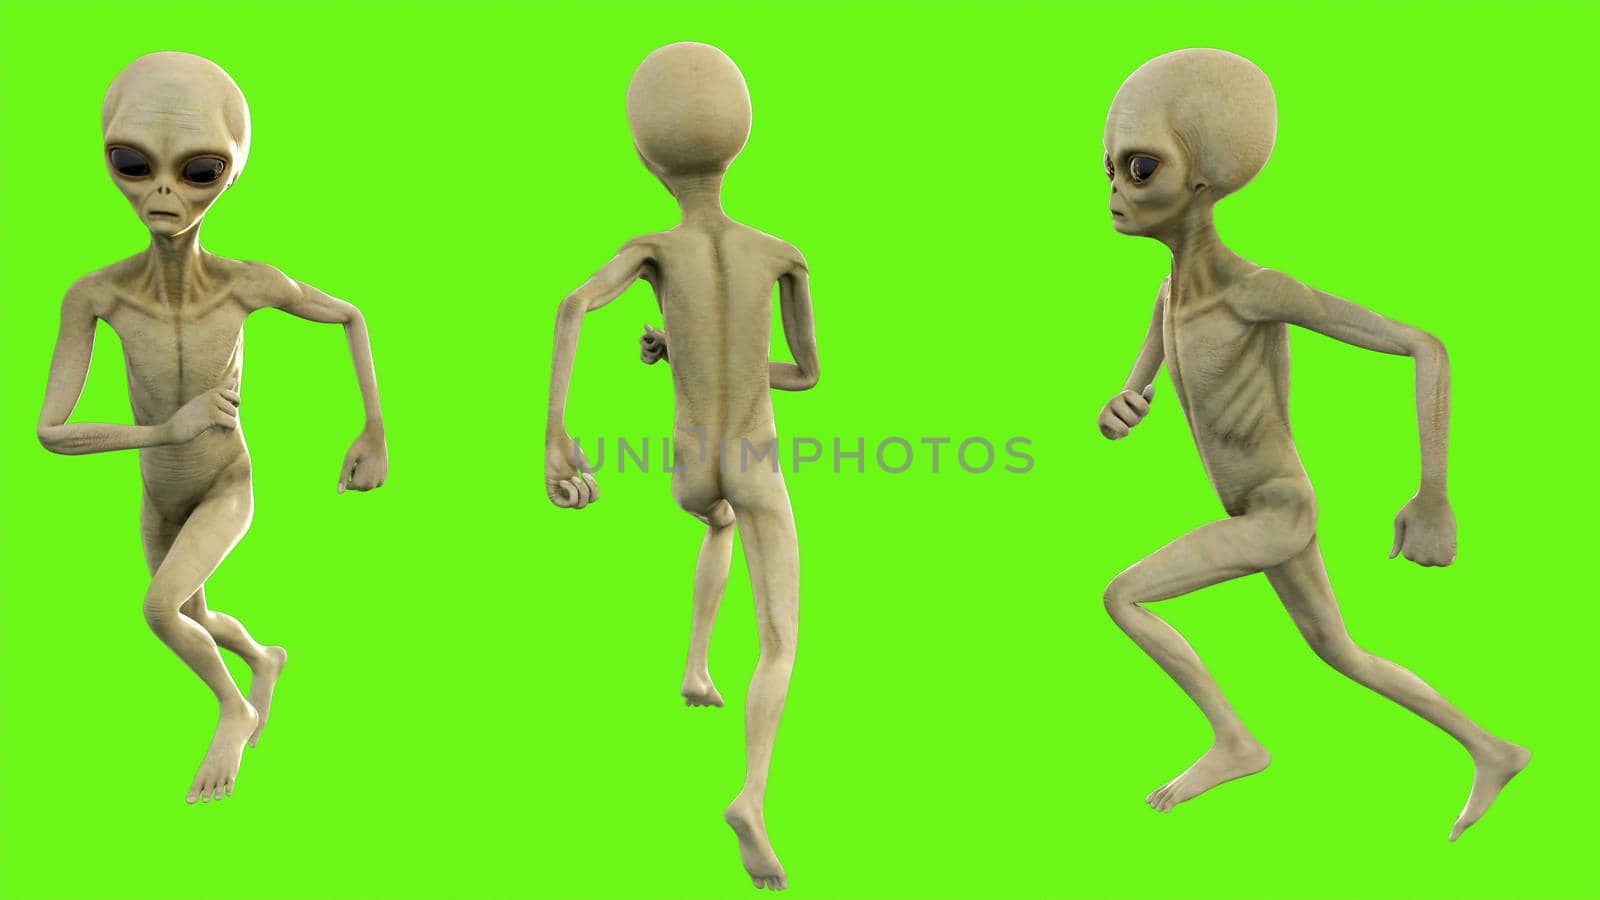 Alien running on green screen. 3D rendering by designprojects